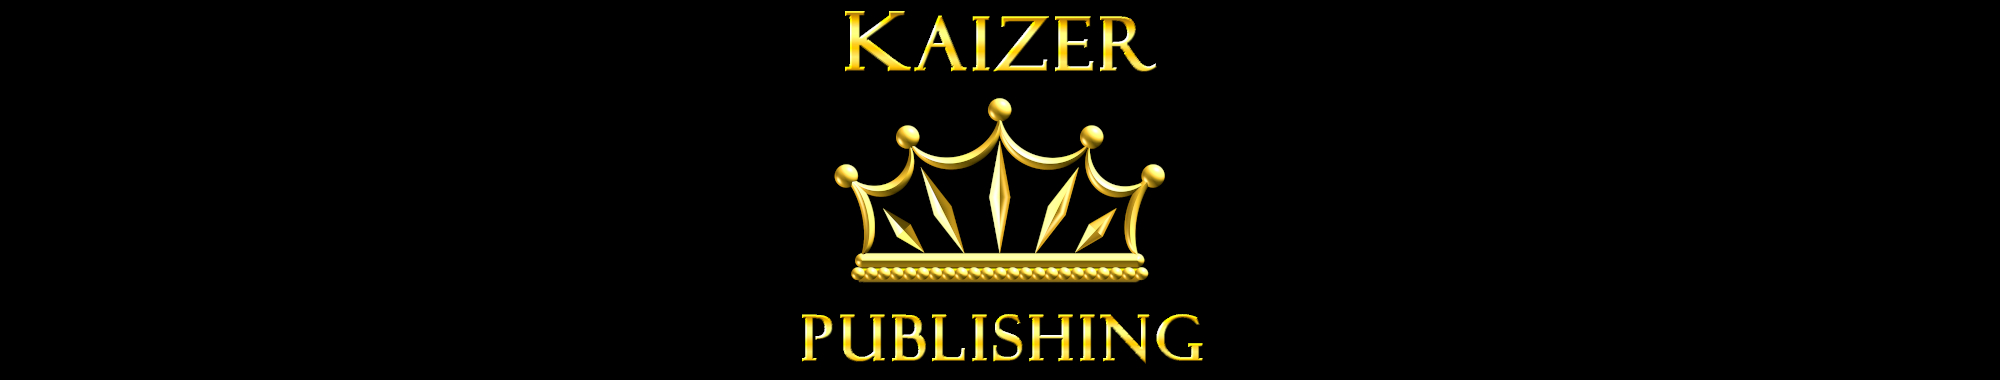 kaizerbooks-kaizer-publishing-website-banner1-2000x380.jpg